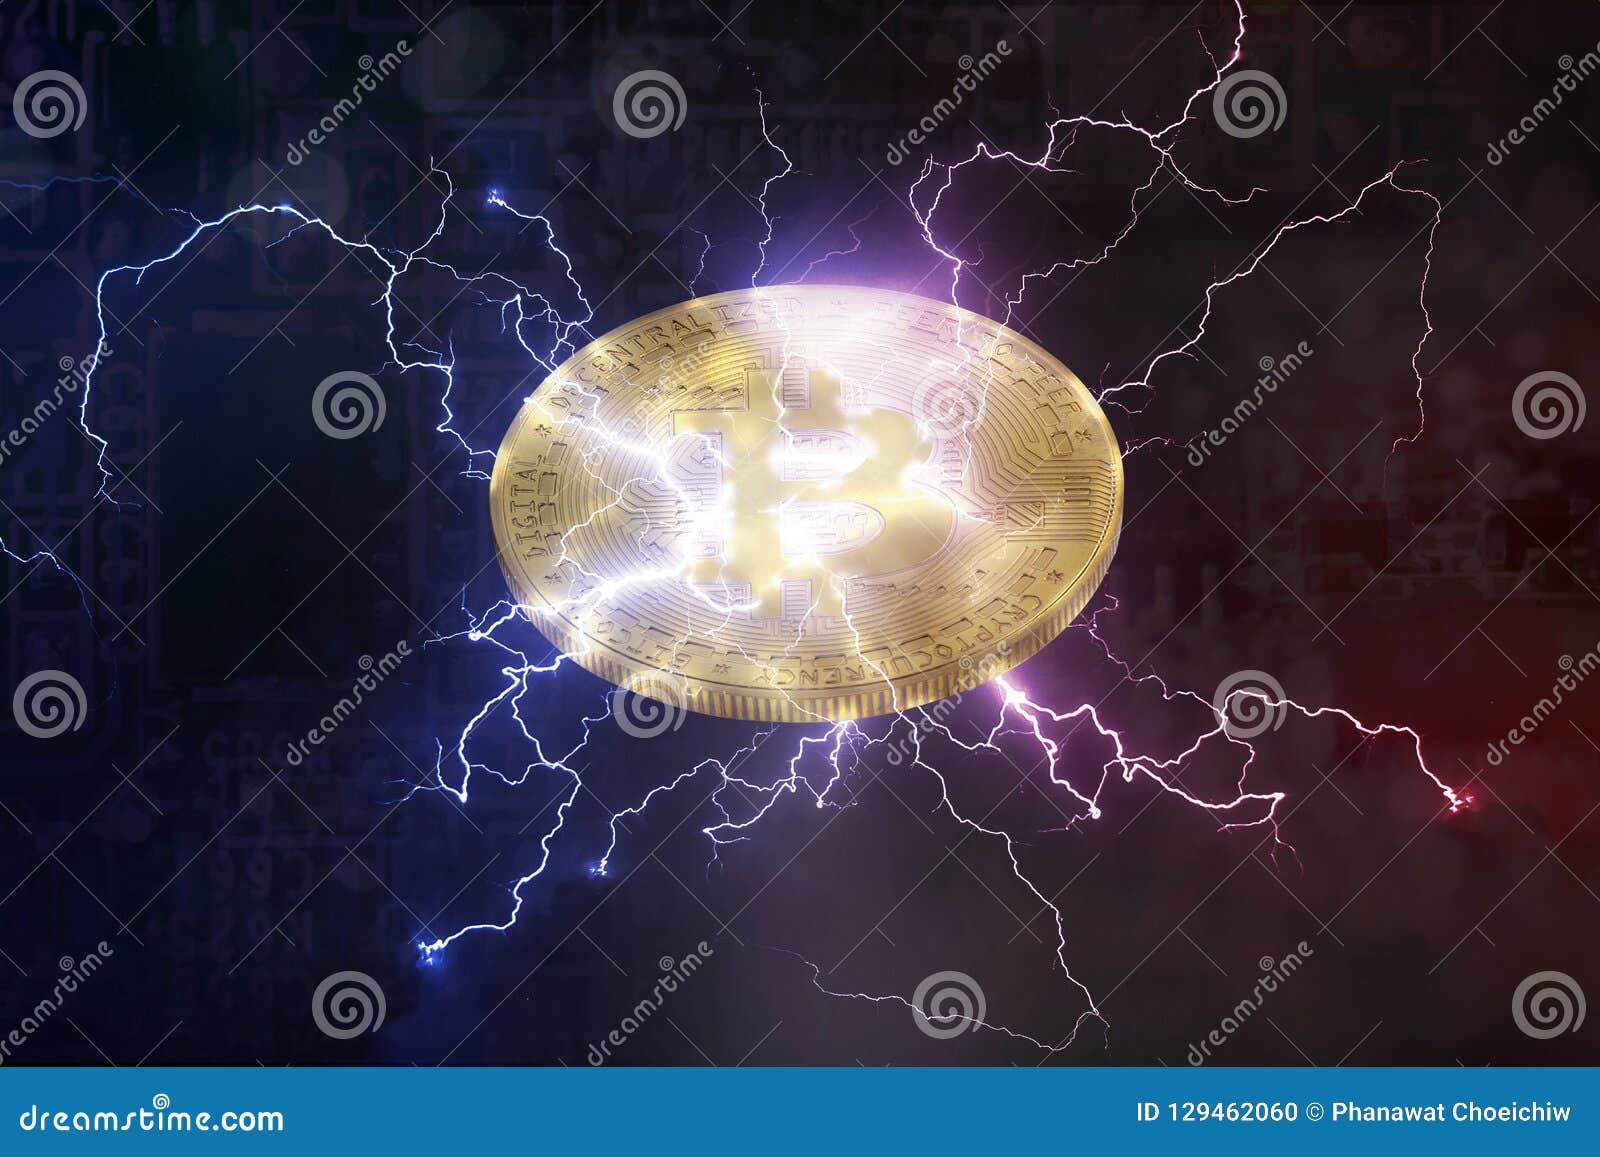 Lightning network cryptocurrency crypto coin elon crypto tweet